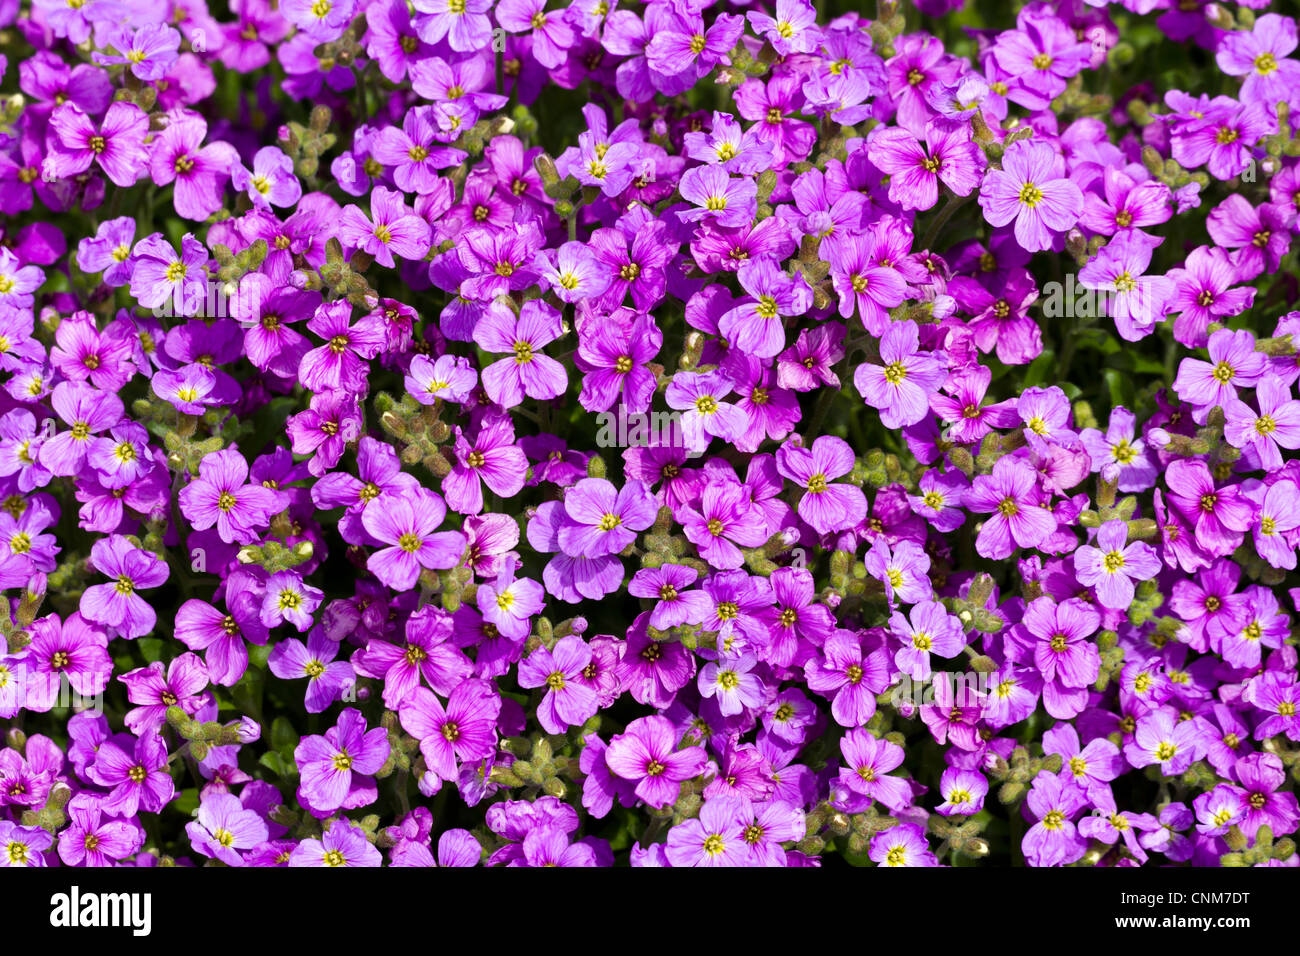 Aubrieta Purple Cascade for background Stock Photo - Alamy